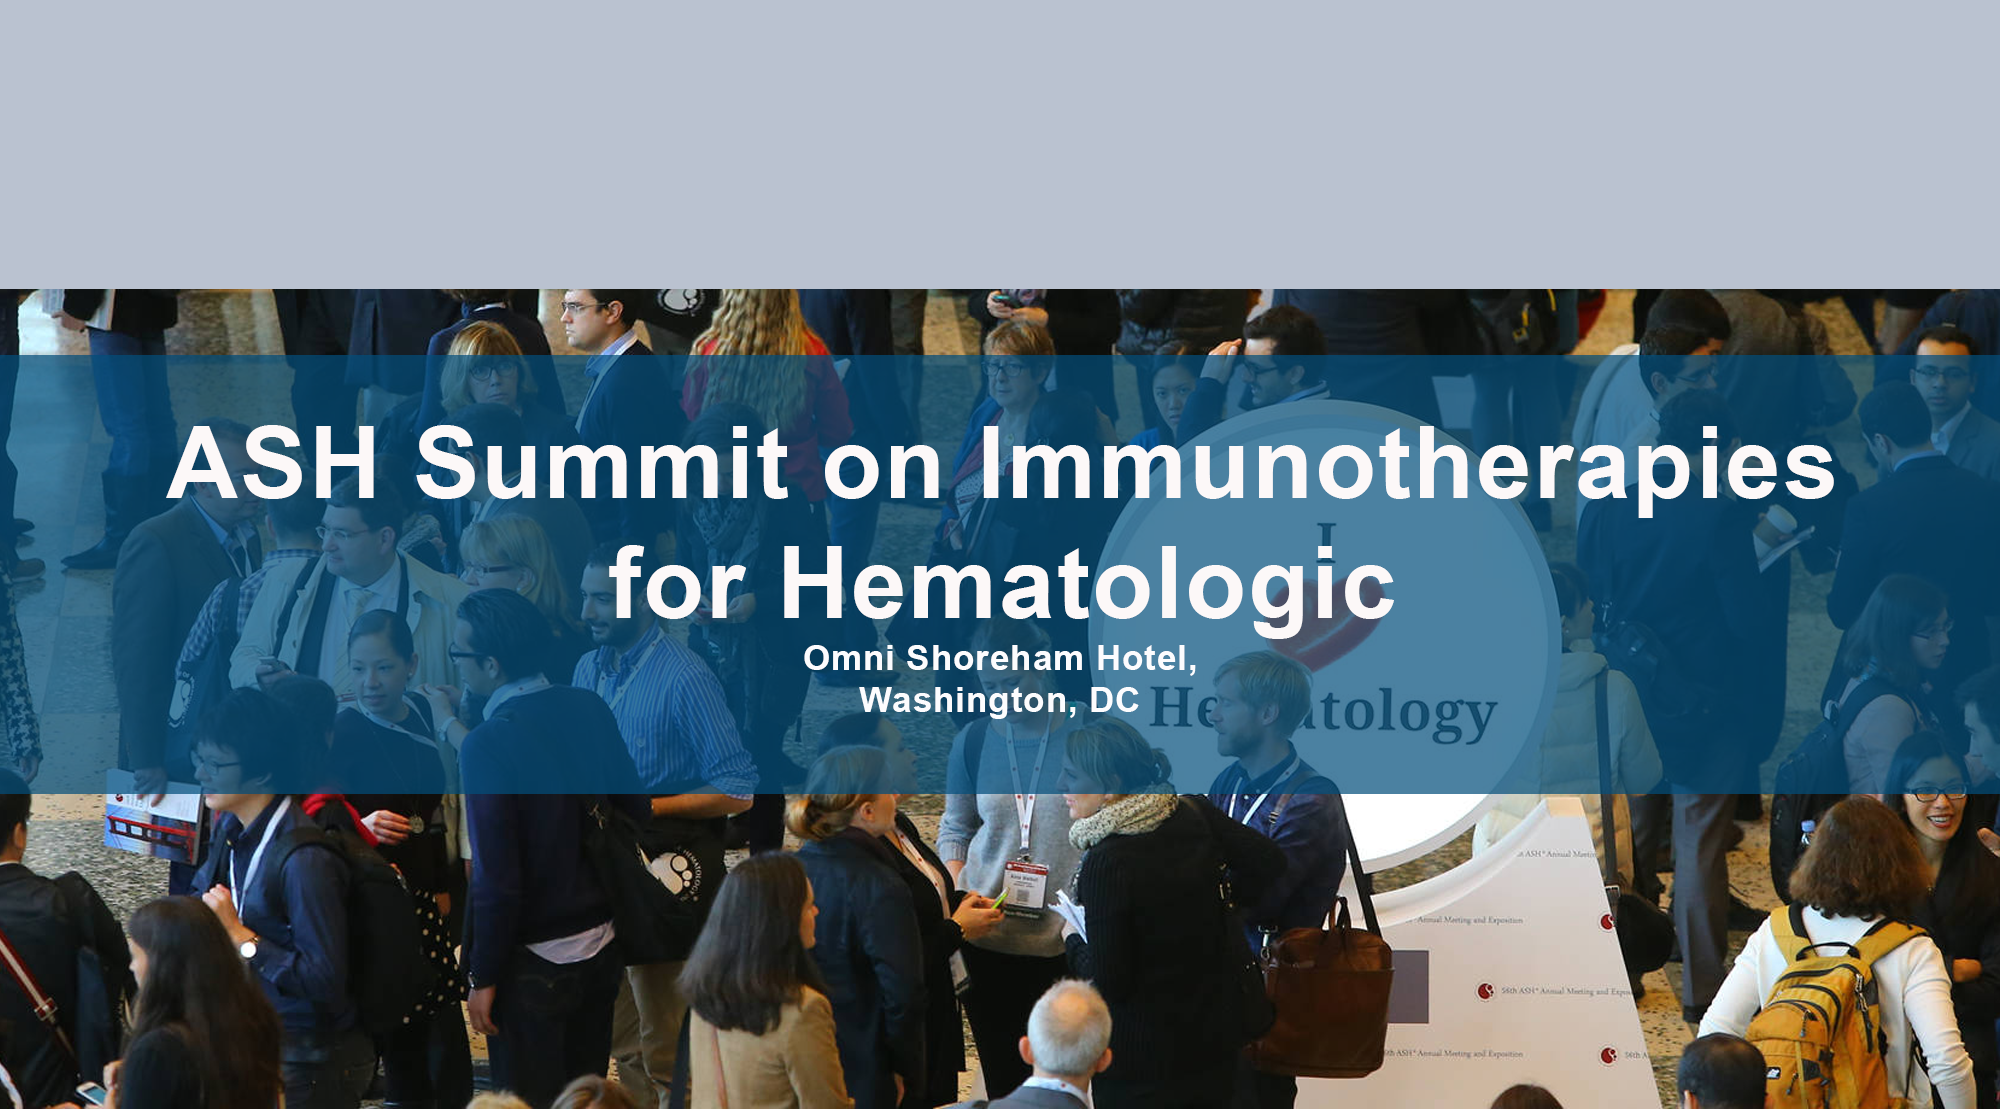 ASH Summit on Immunotherapies for Hematologic Diseases